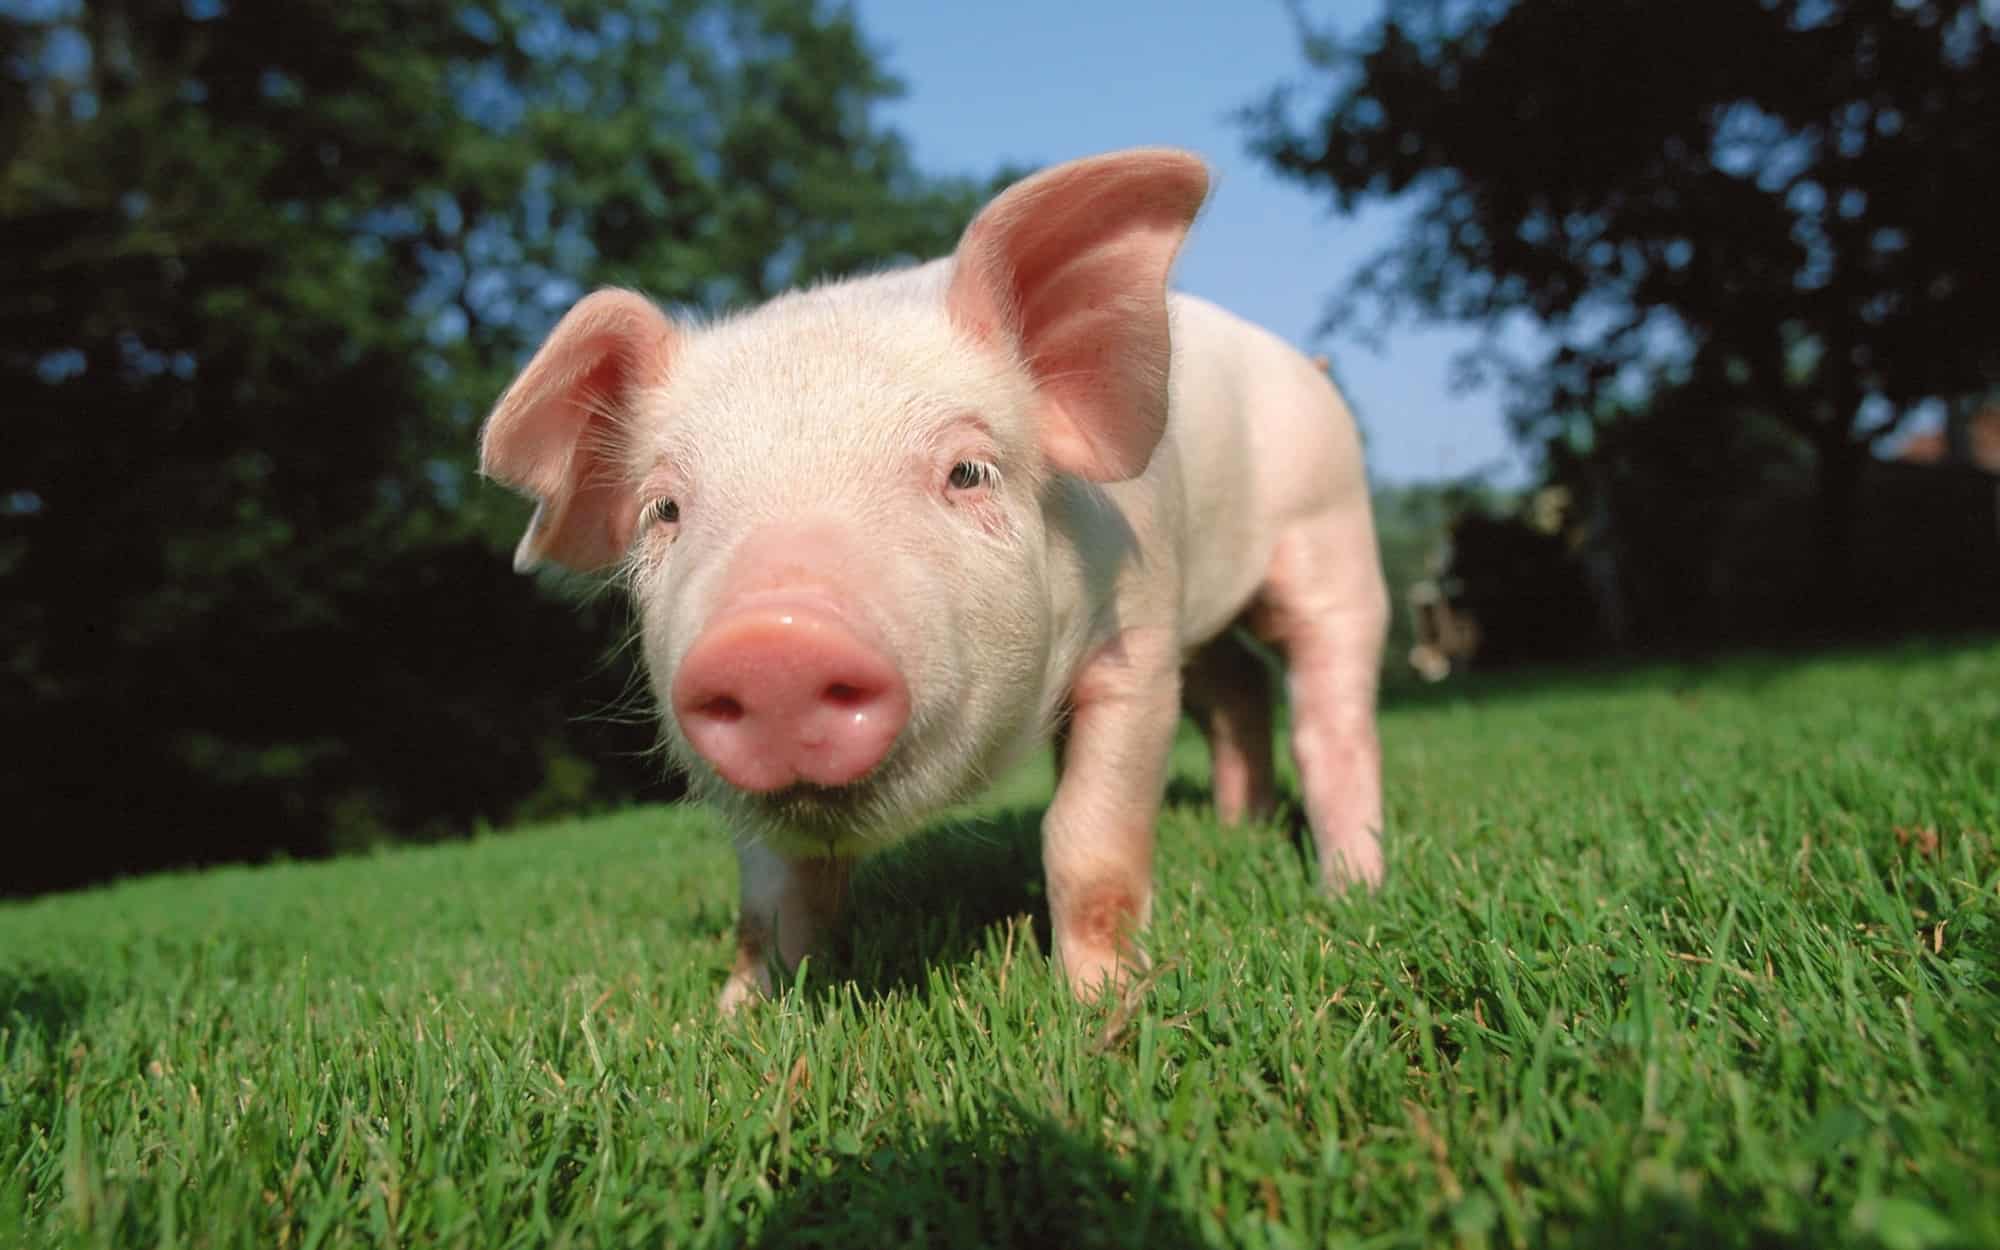 تفسير رفض أكل لحم الخنزير للعزباء